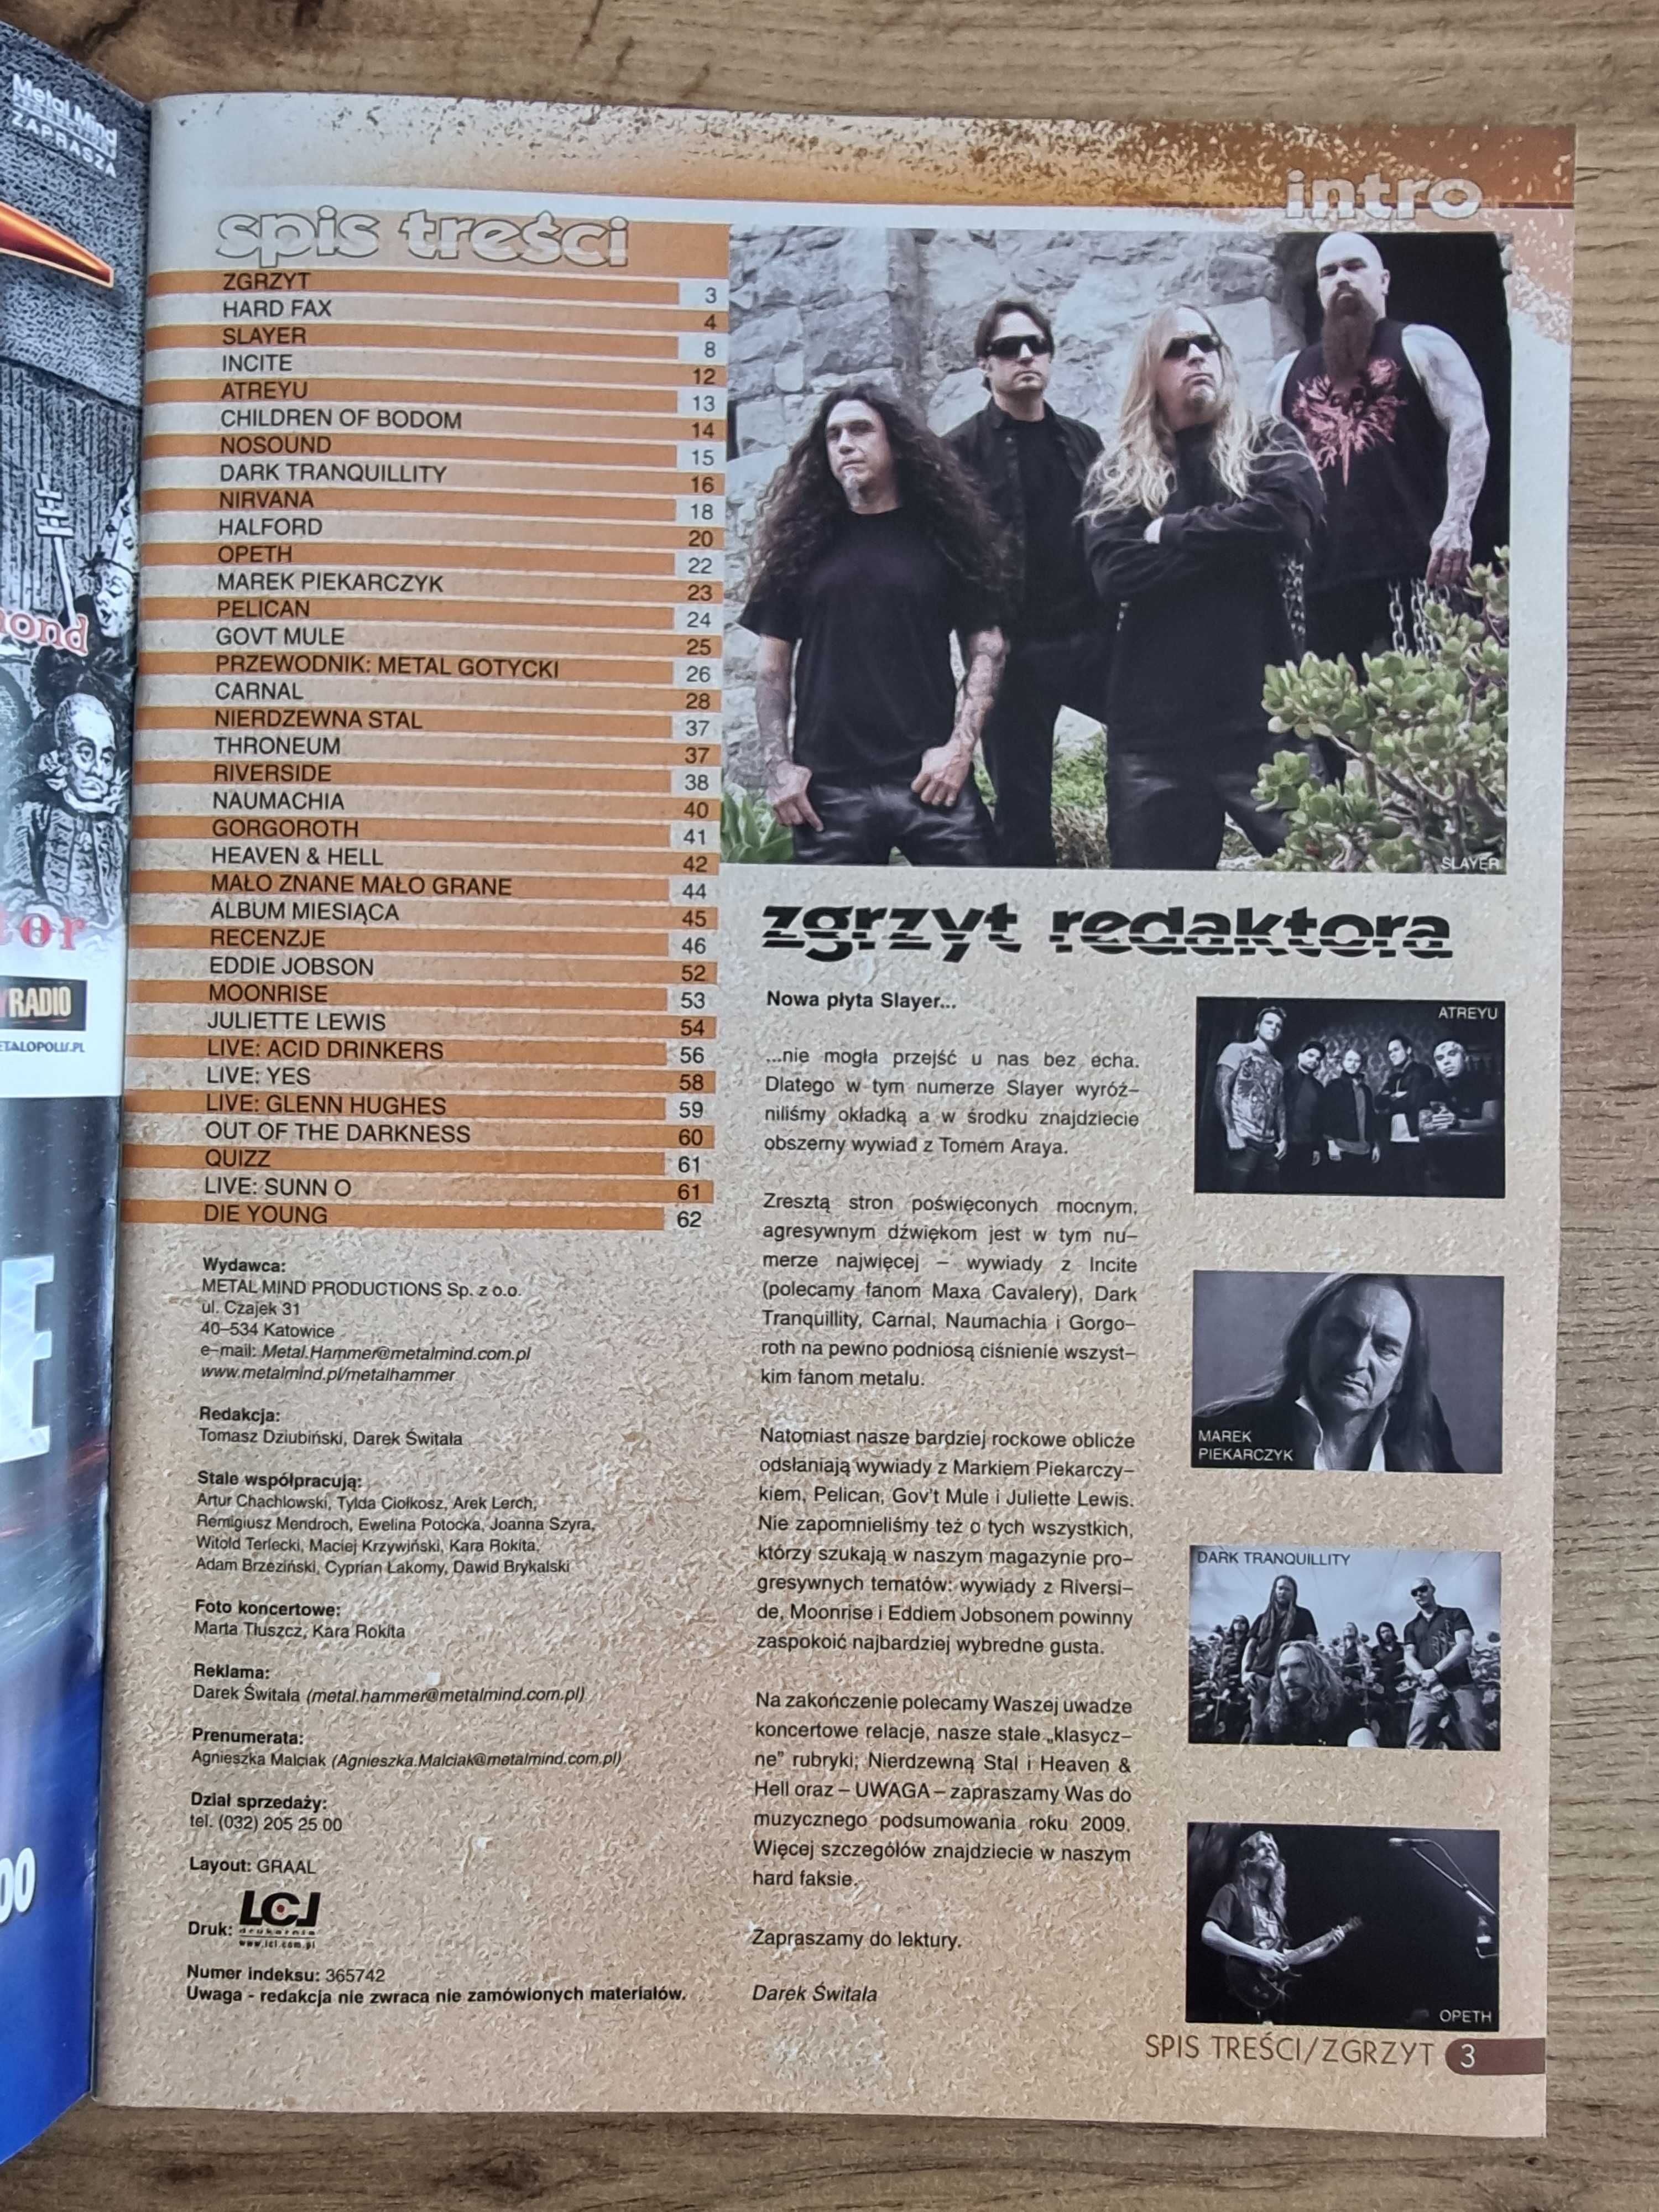 Metal Hammer 2009 - Slayer, Plakaty: Rammstein, Closterkeller